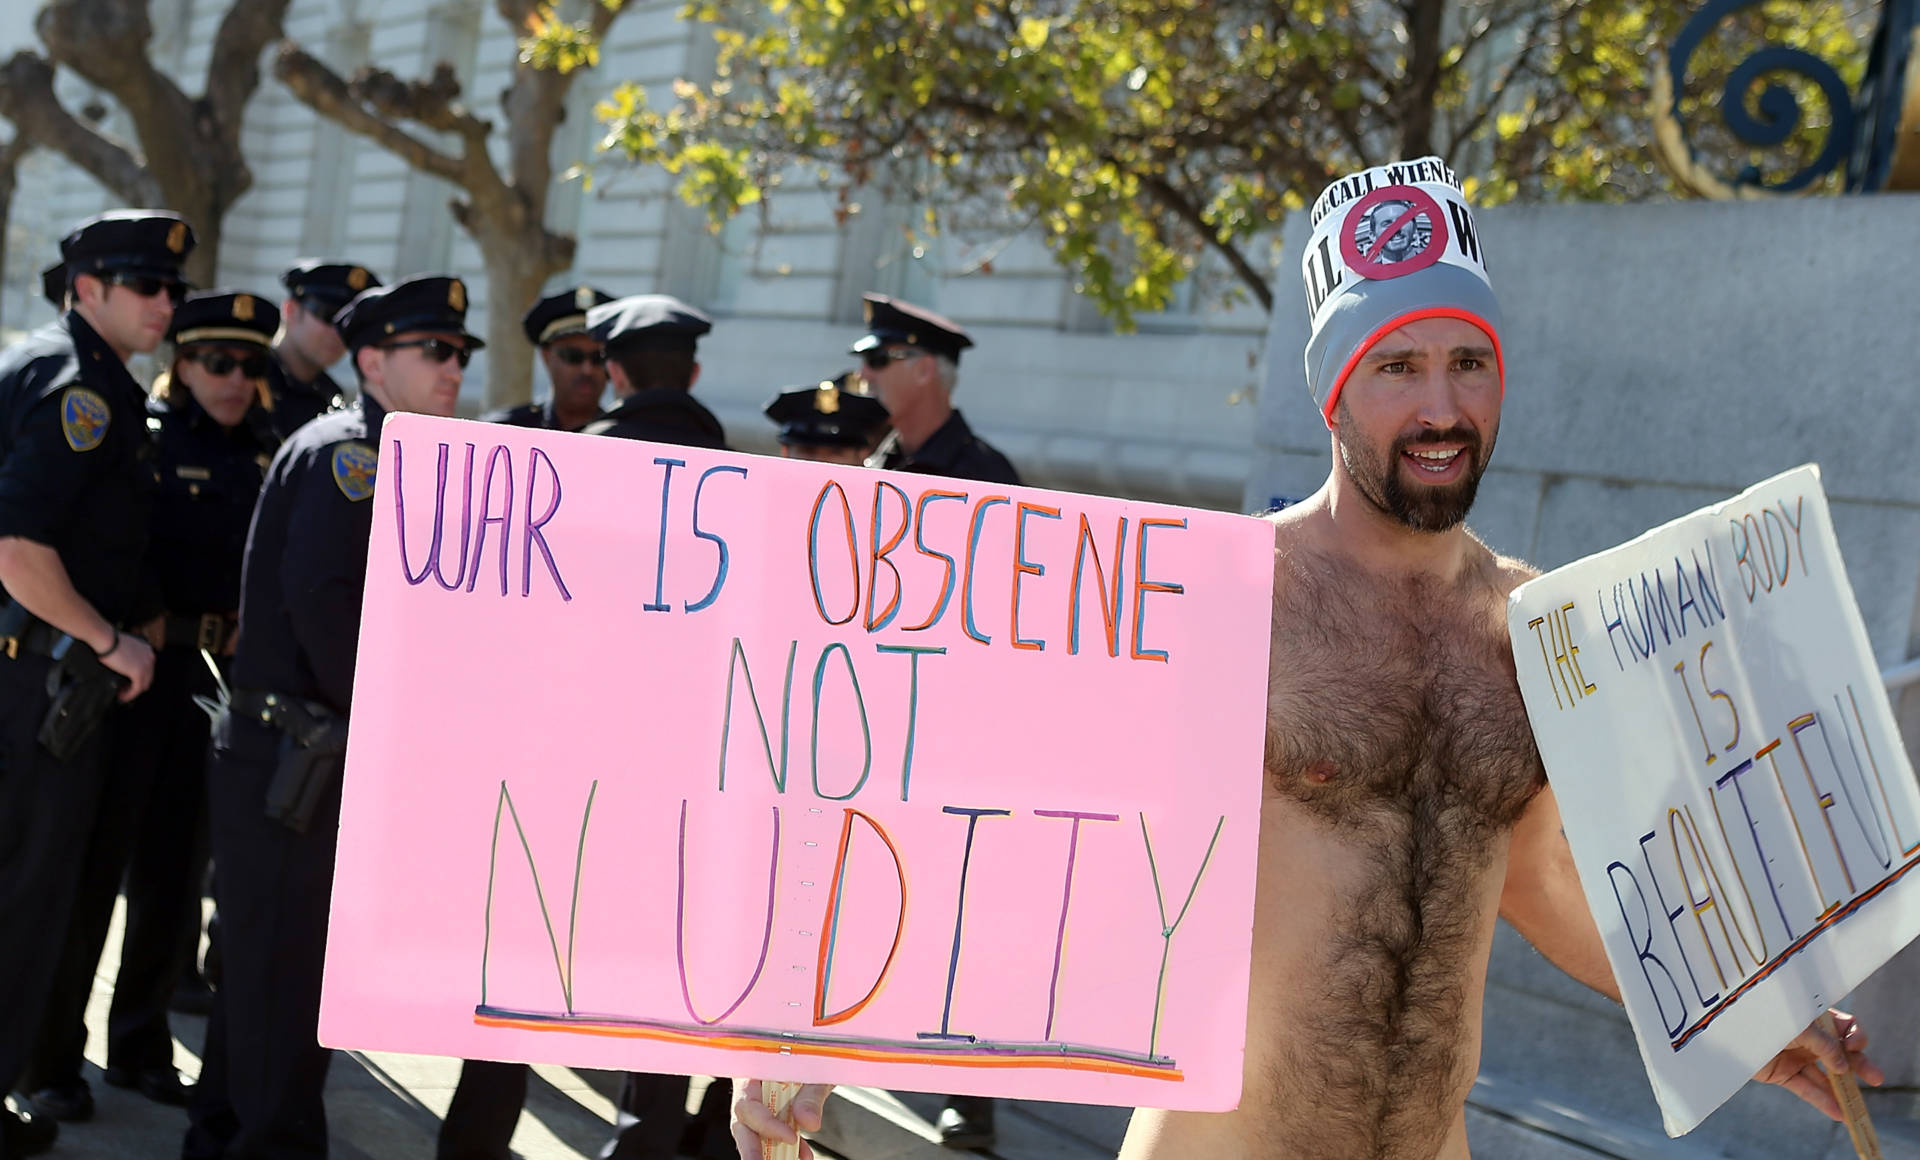 Thats offensive - nude photos